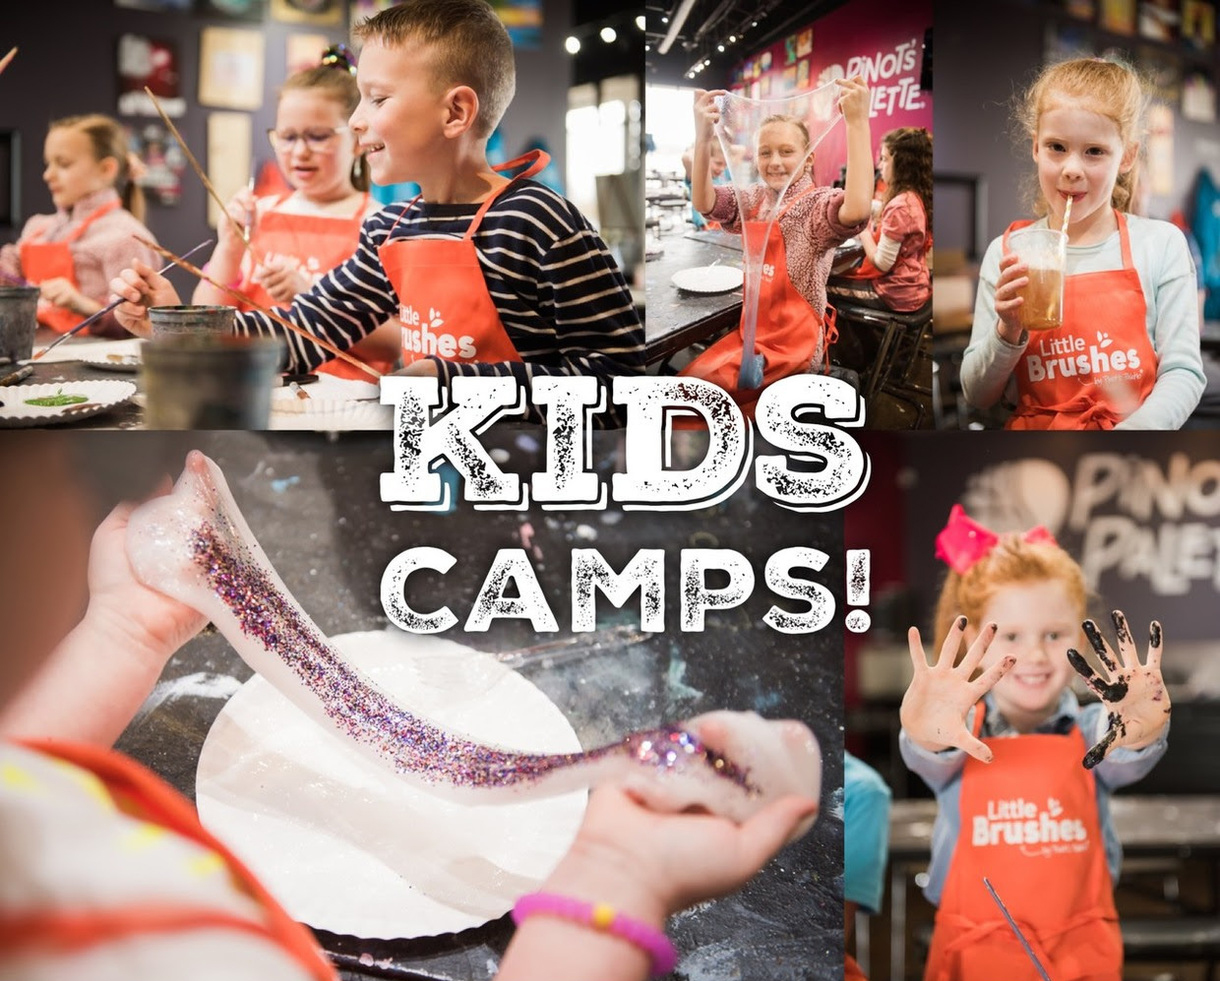 Full Week of Kid's Summer Art Camp! Register here!